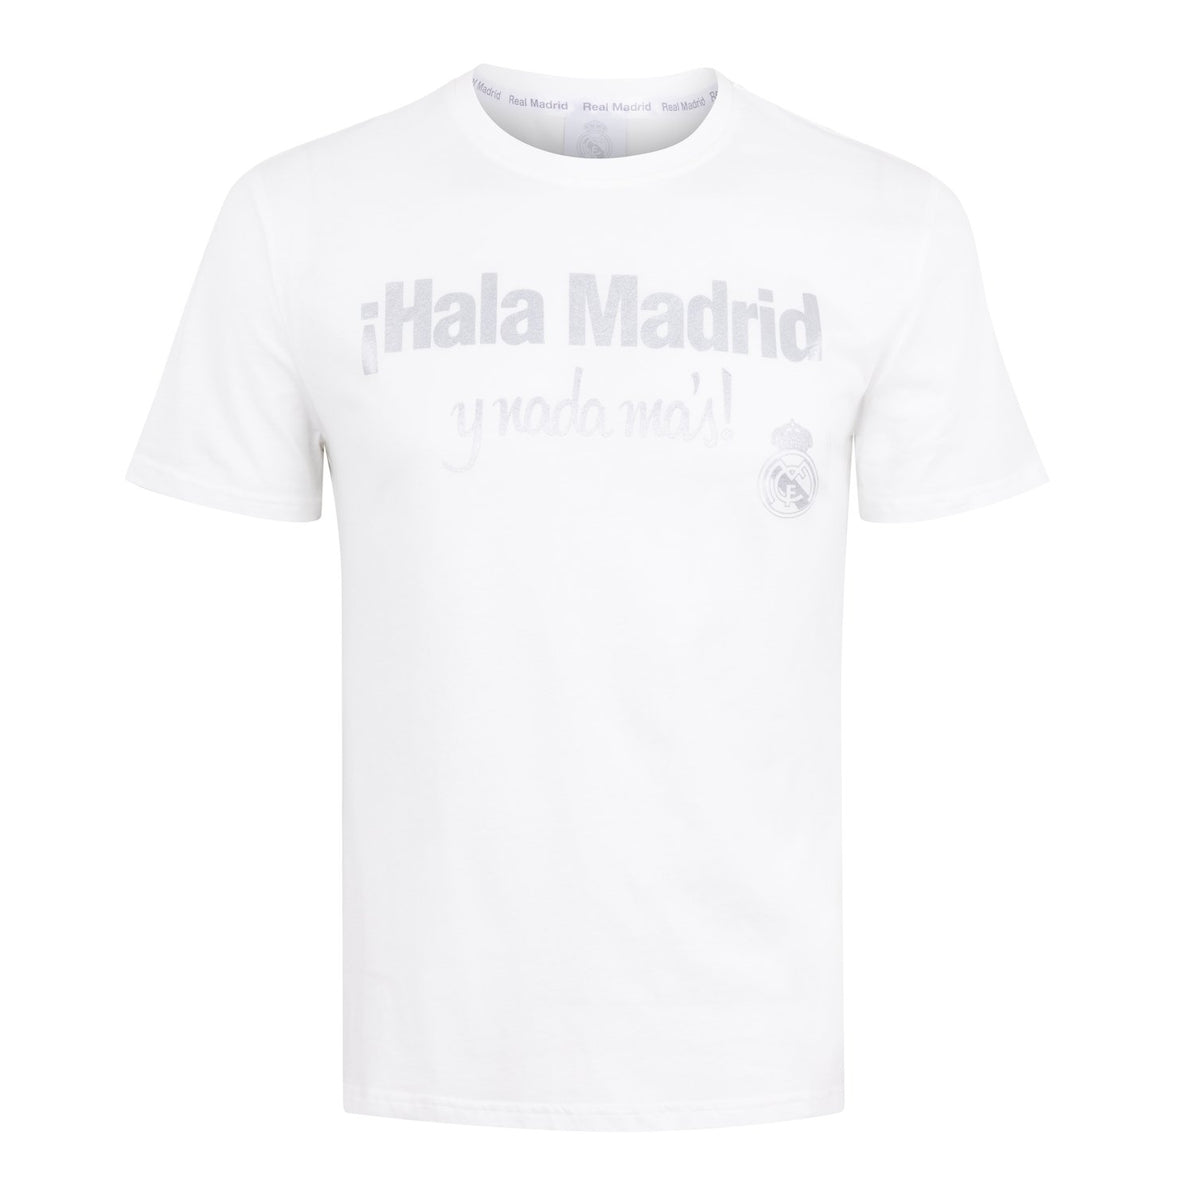 Real Madrid Hala Madrid T-Shirt - White 